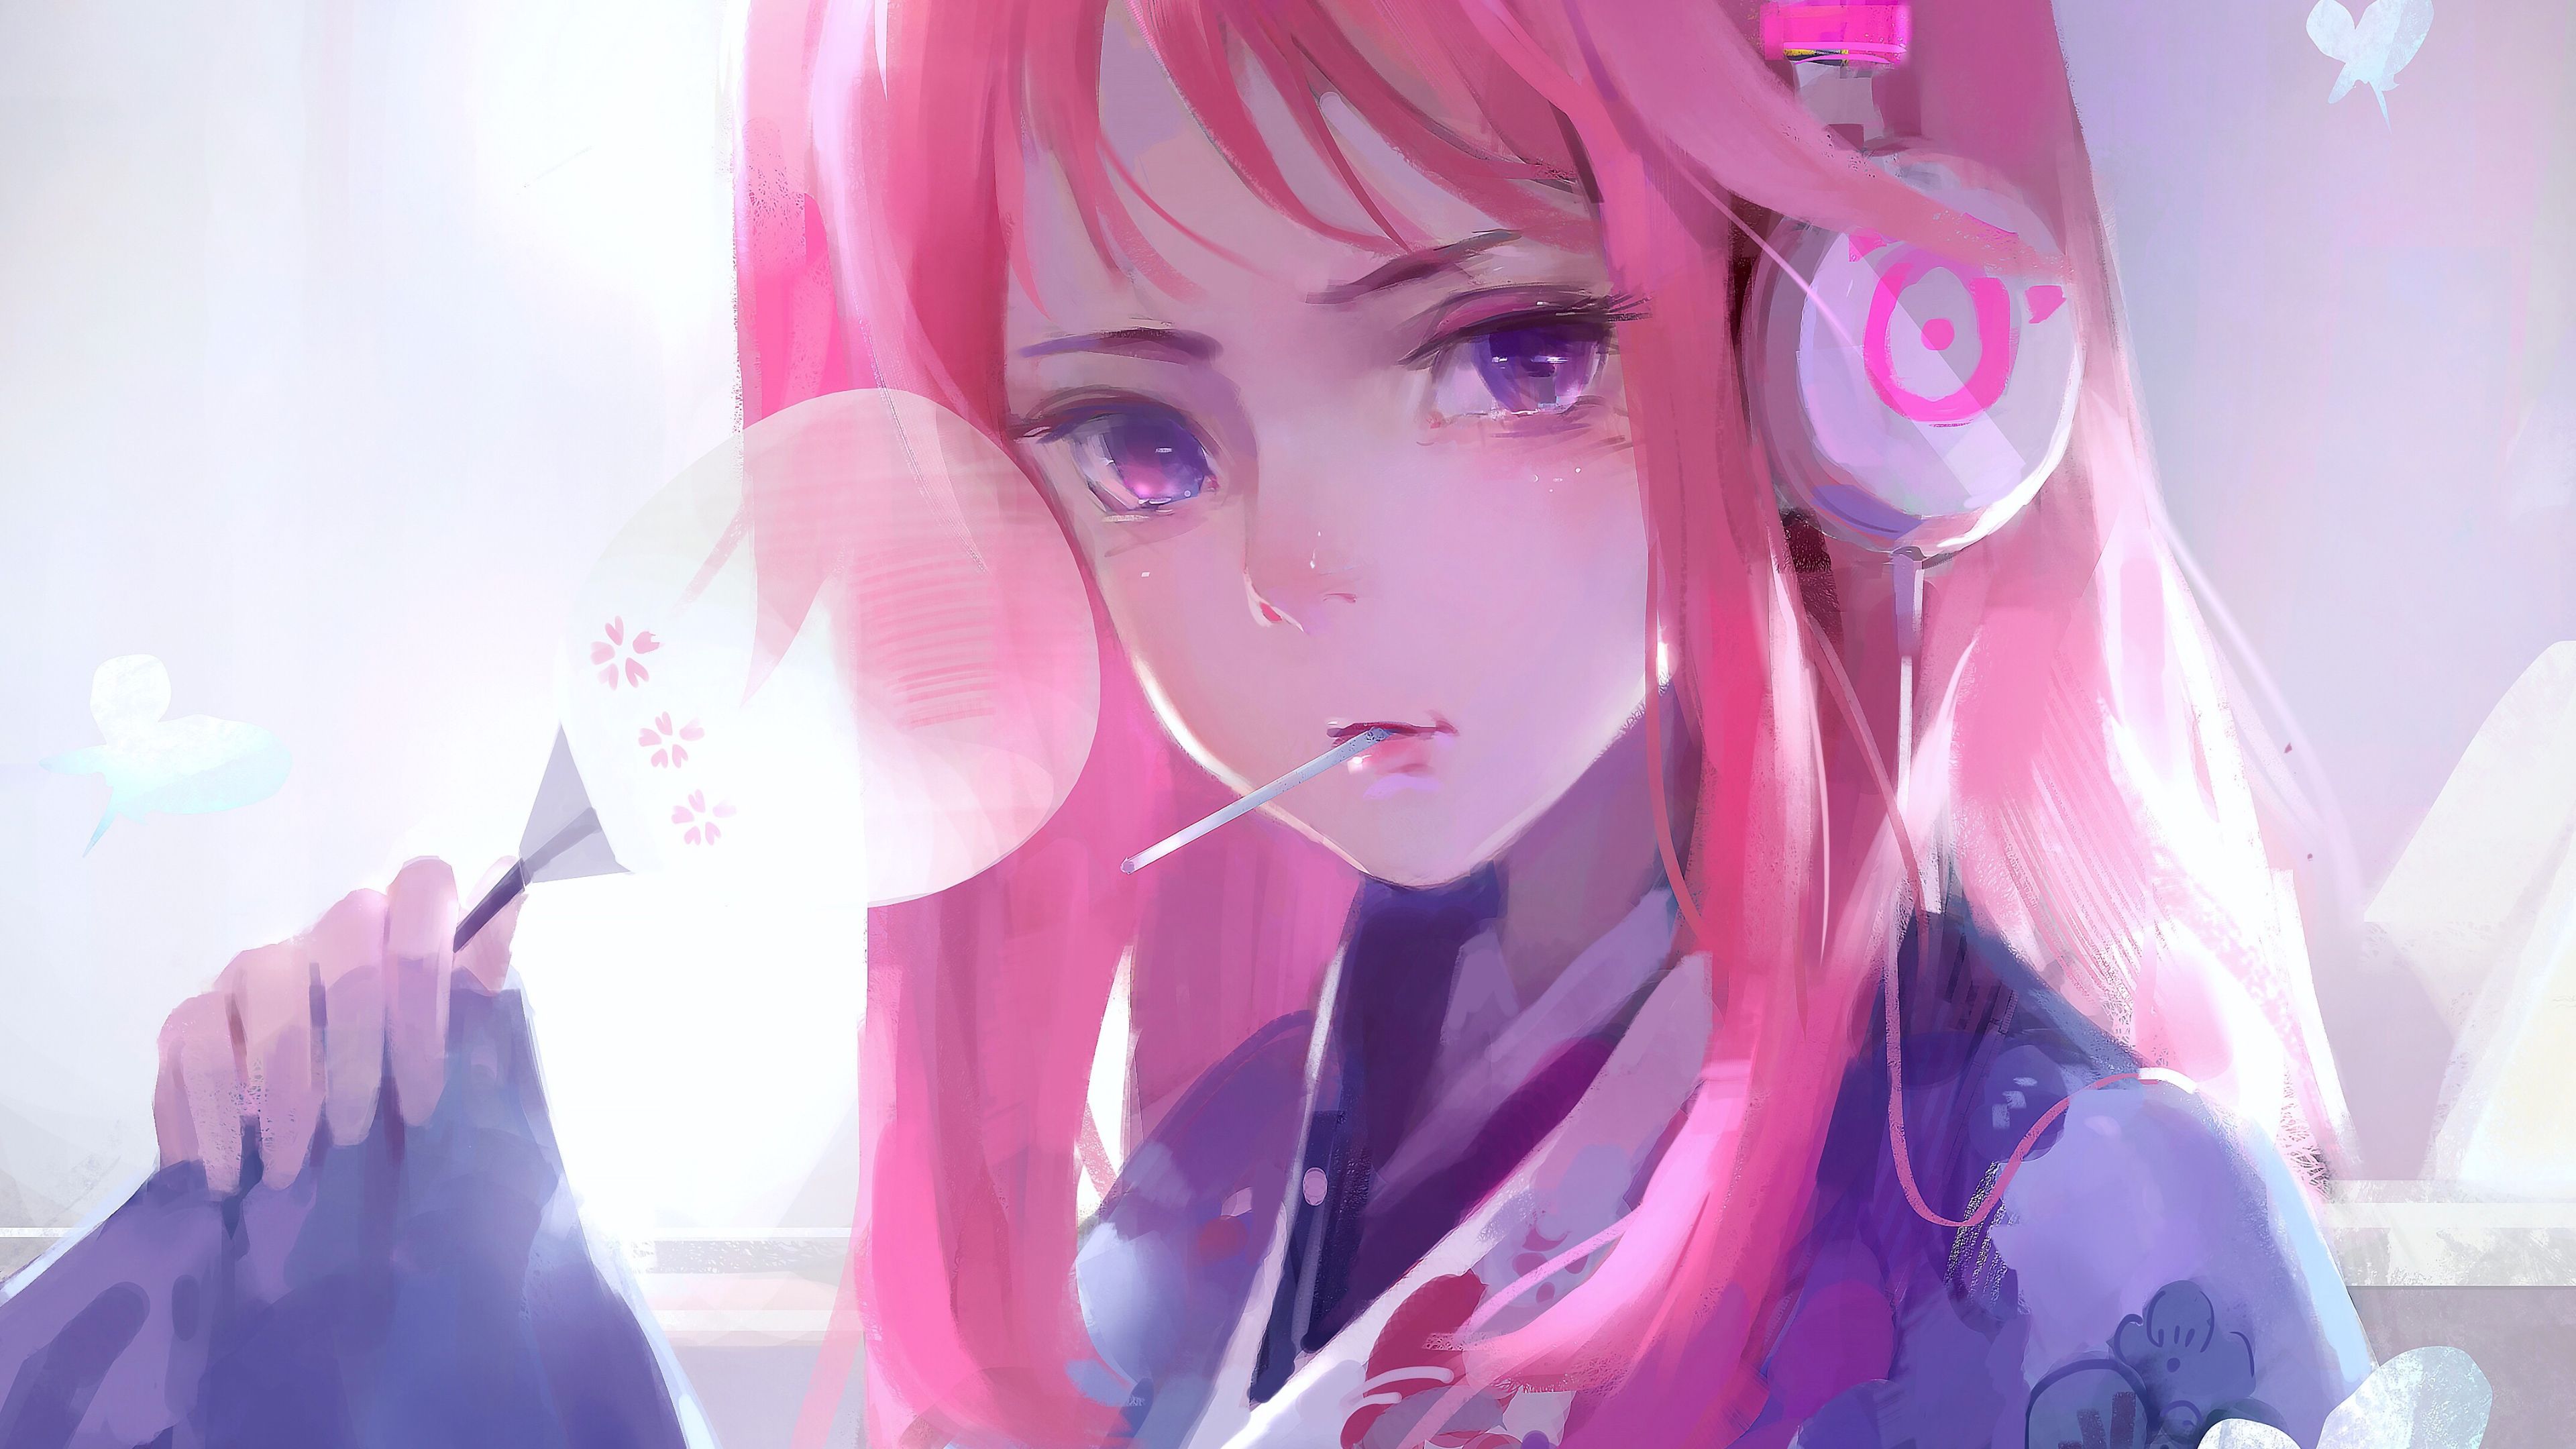 Anime girl with pink hair and headphones, anime 4k wallpapers for your desktop or mobile screen - Pink anime, anime girl